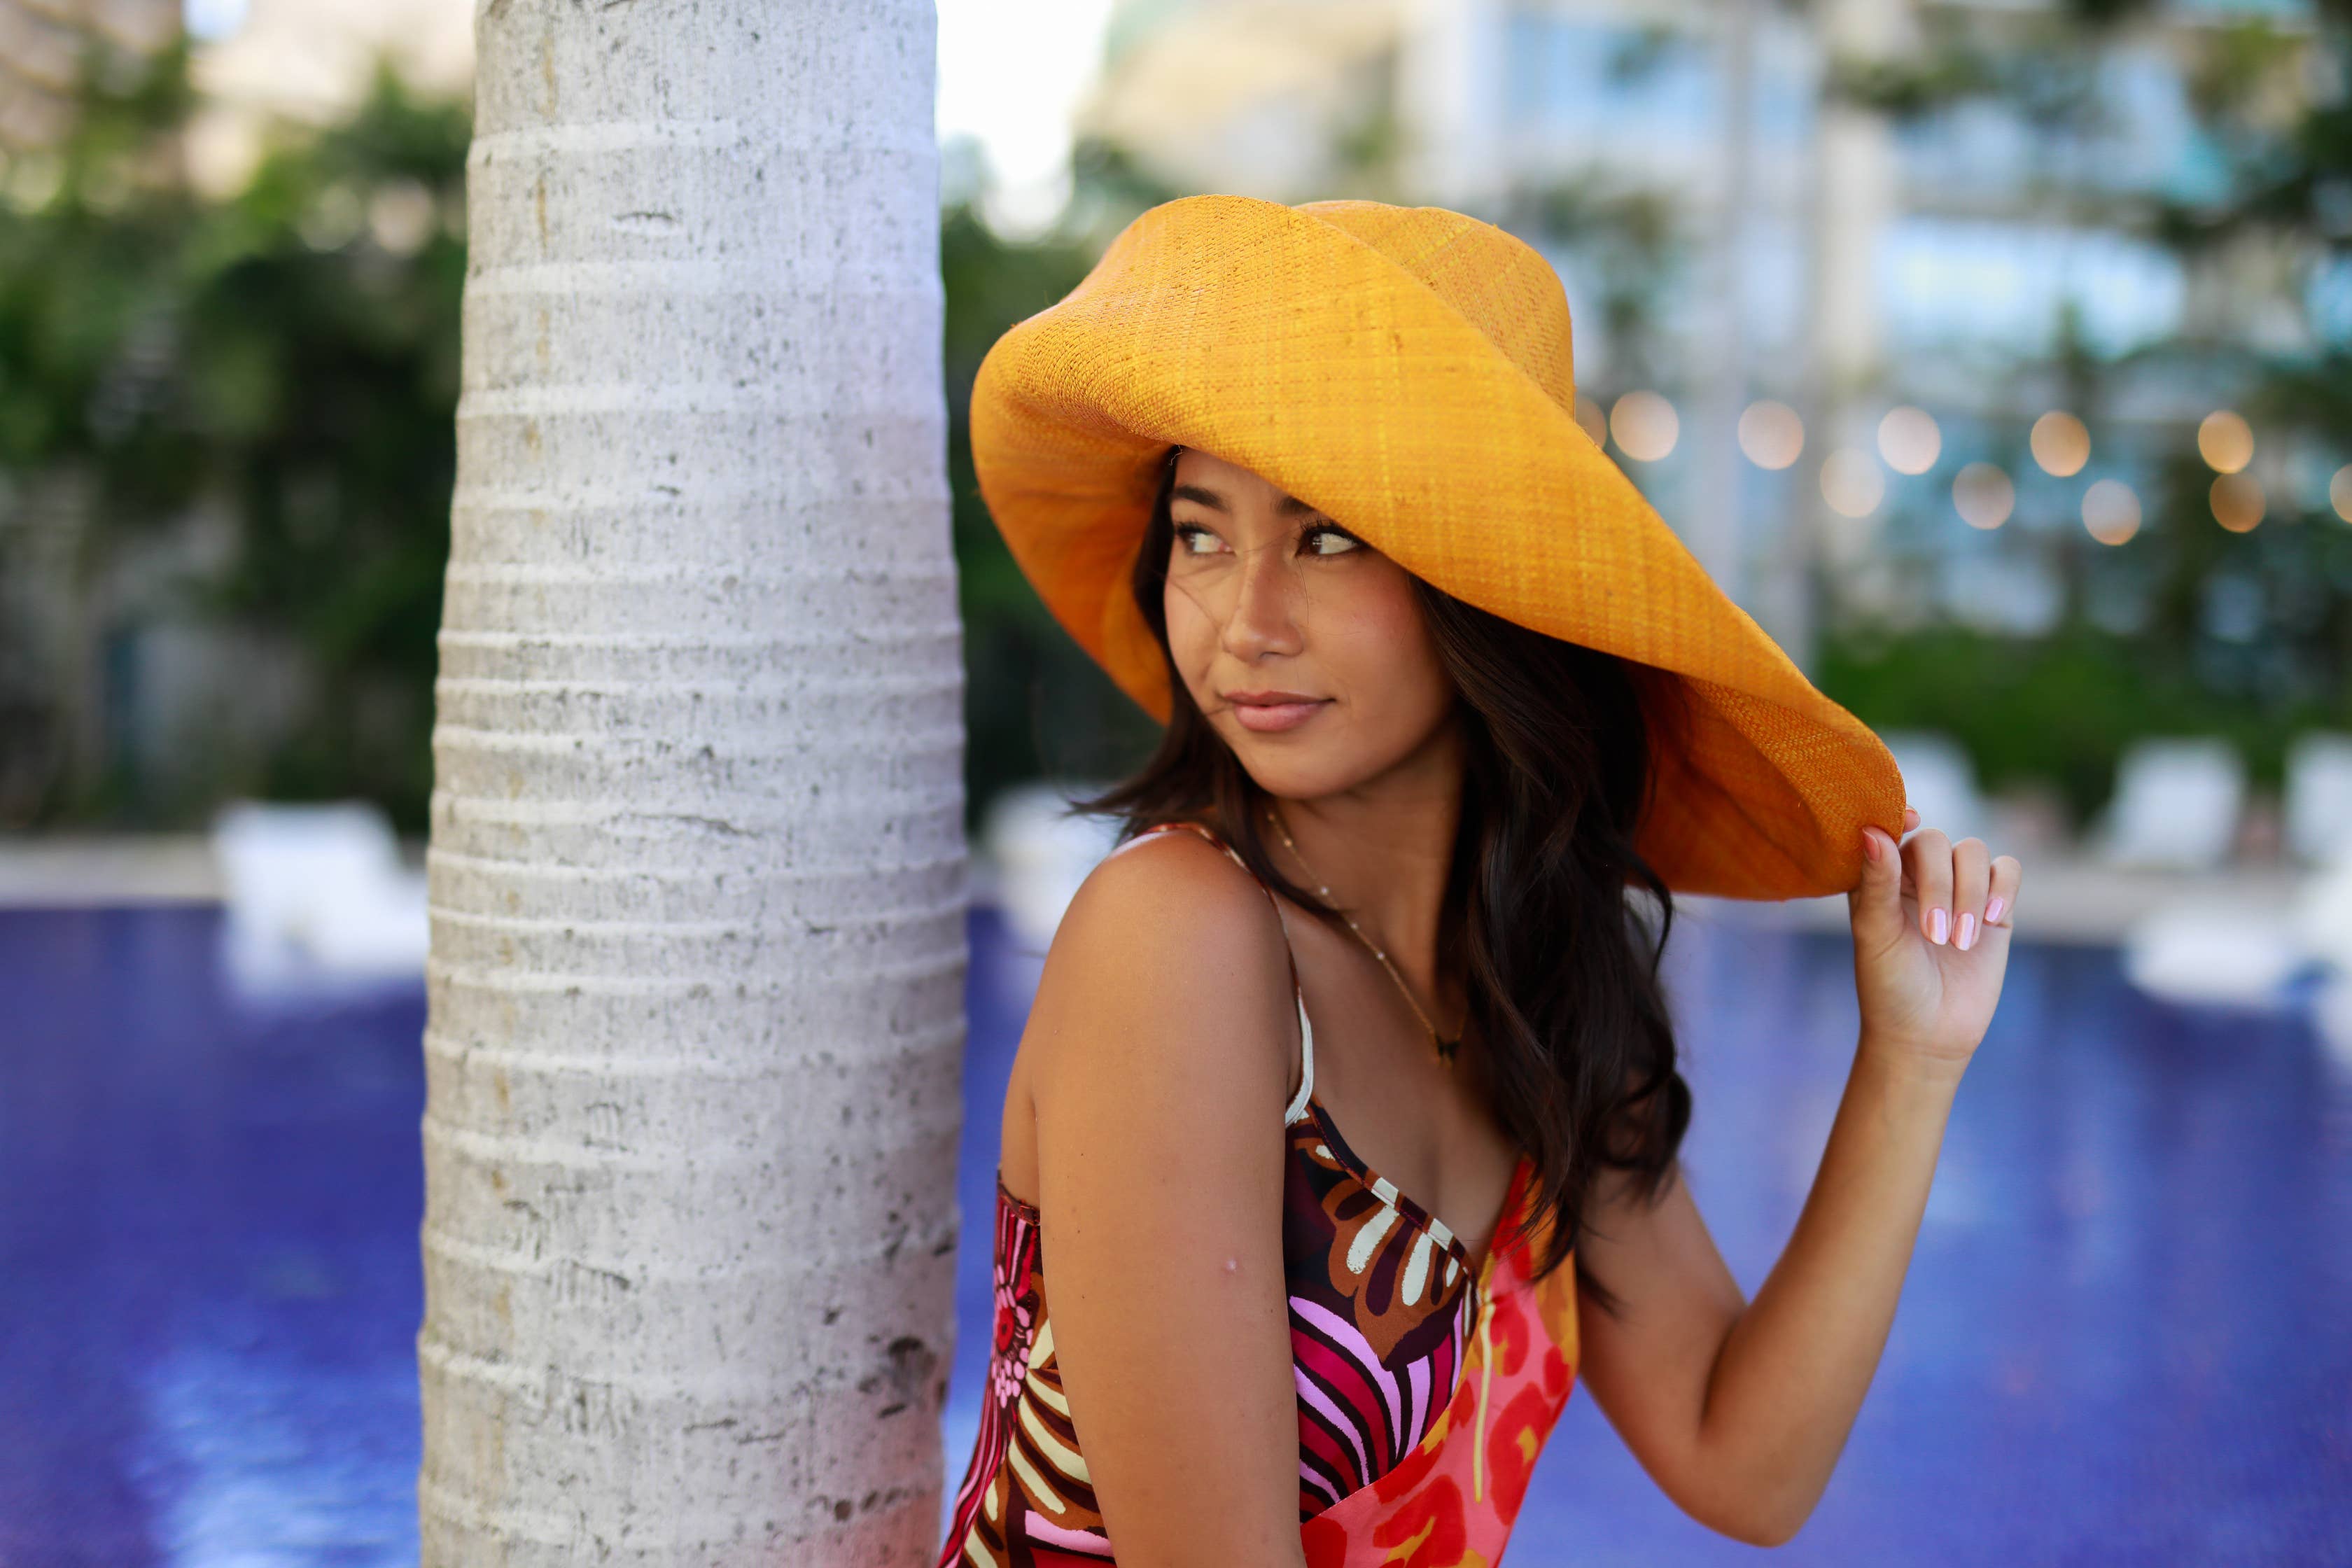 Wholesale Sun Hats: Colored Stripes Packable 5 & 7 Brim Raffia Straw for  your store - Faire Canada